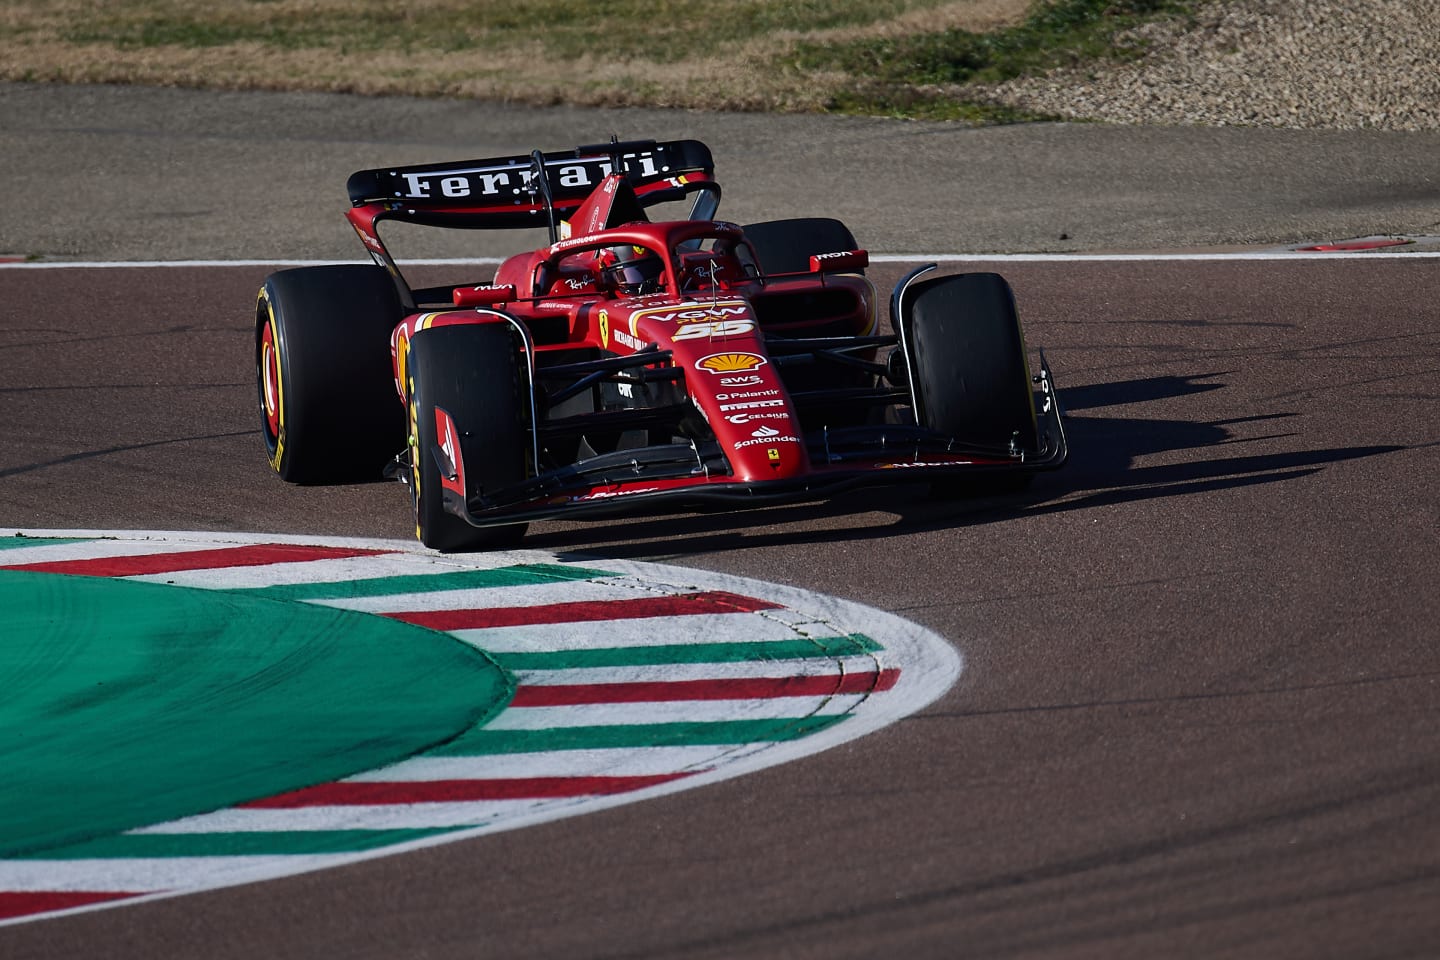 FIORANO MODENESE, ITALY - FEBRUARY 14: Carlos Sainz of Spain and Scuderia Ferrari drives the new